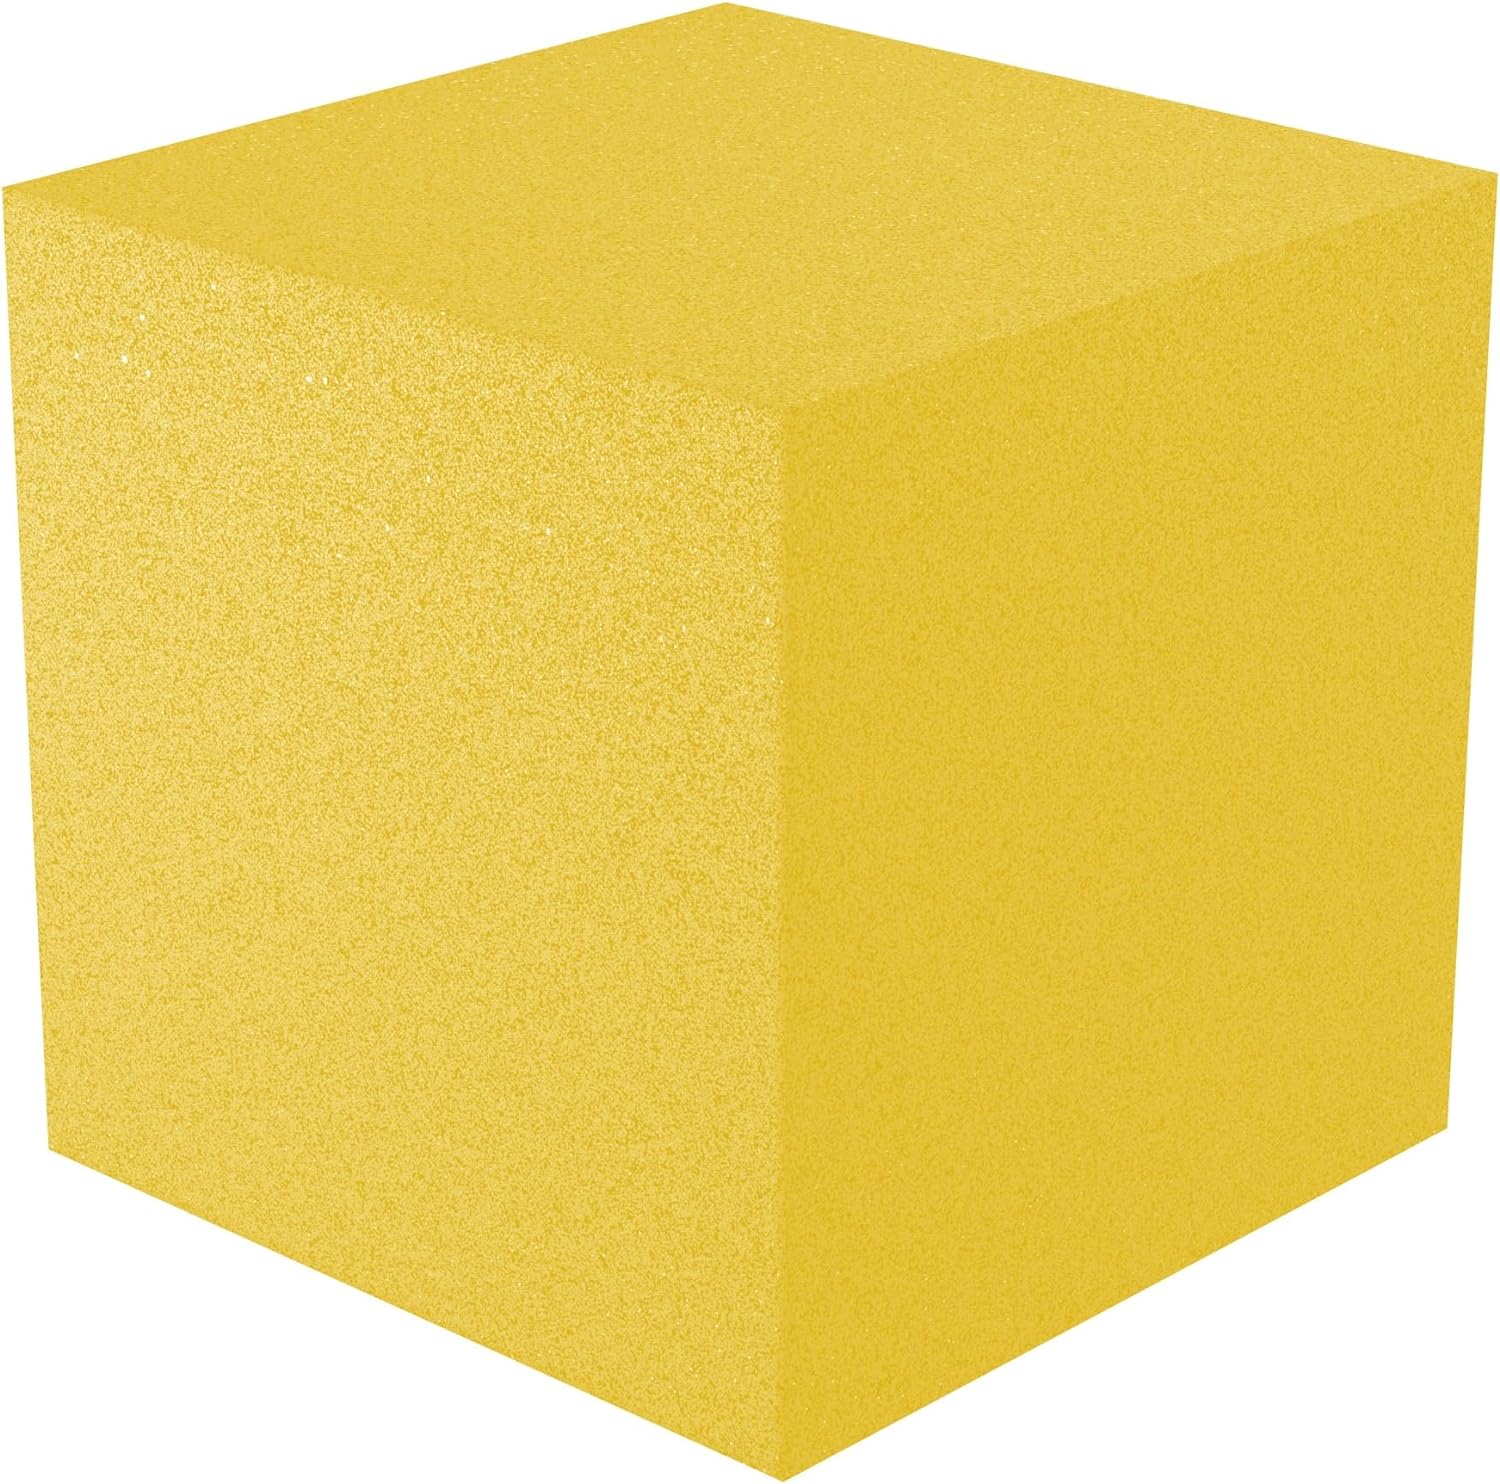 12x12x12 acoustic foam corner block - yellow foam square